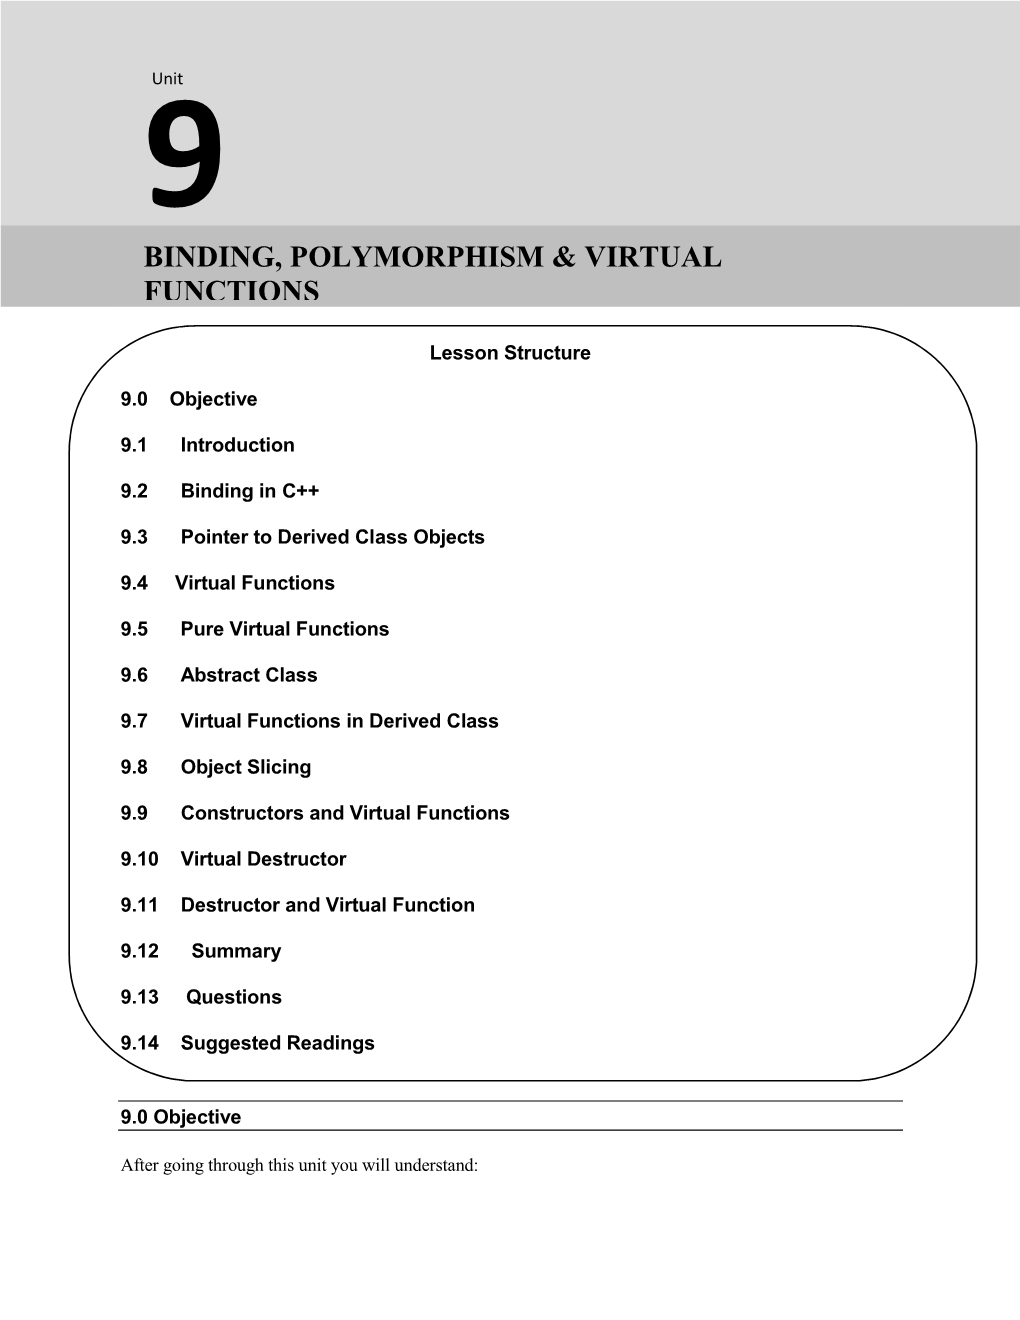 Binding, Polymorphism & Virtual Functions